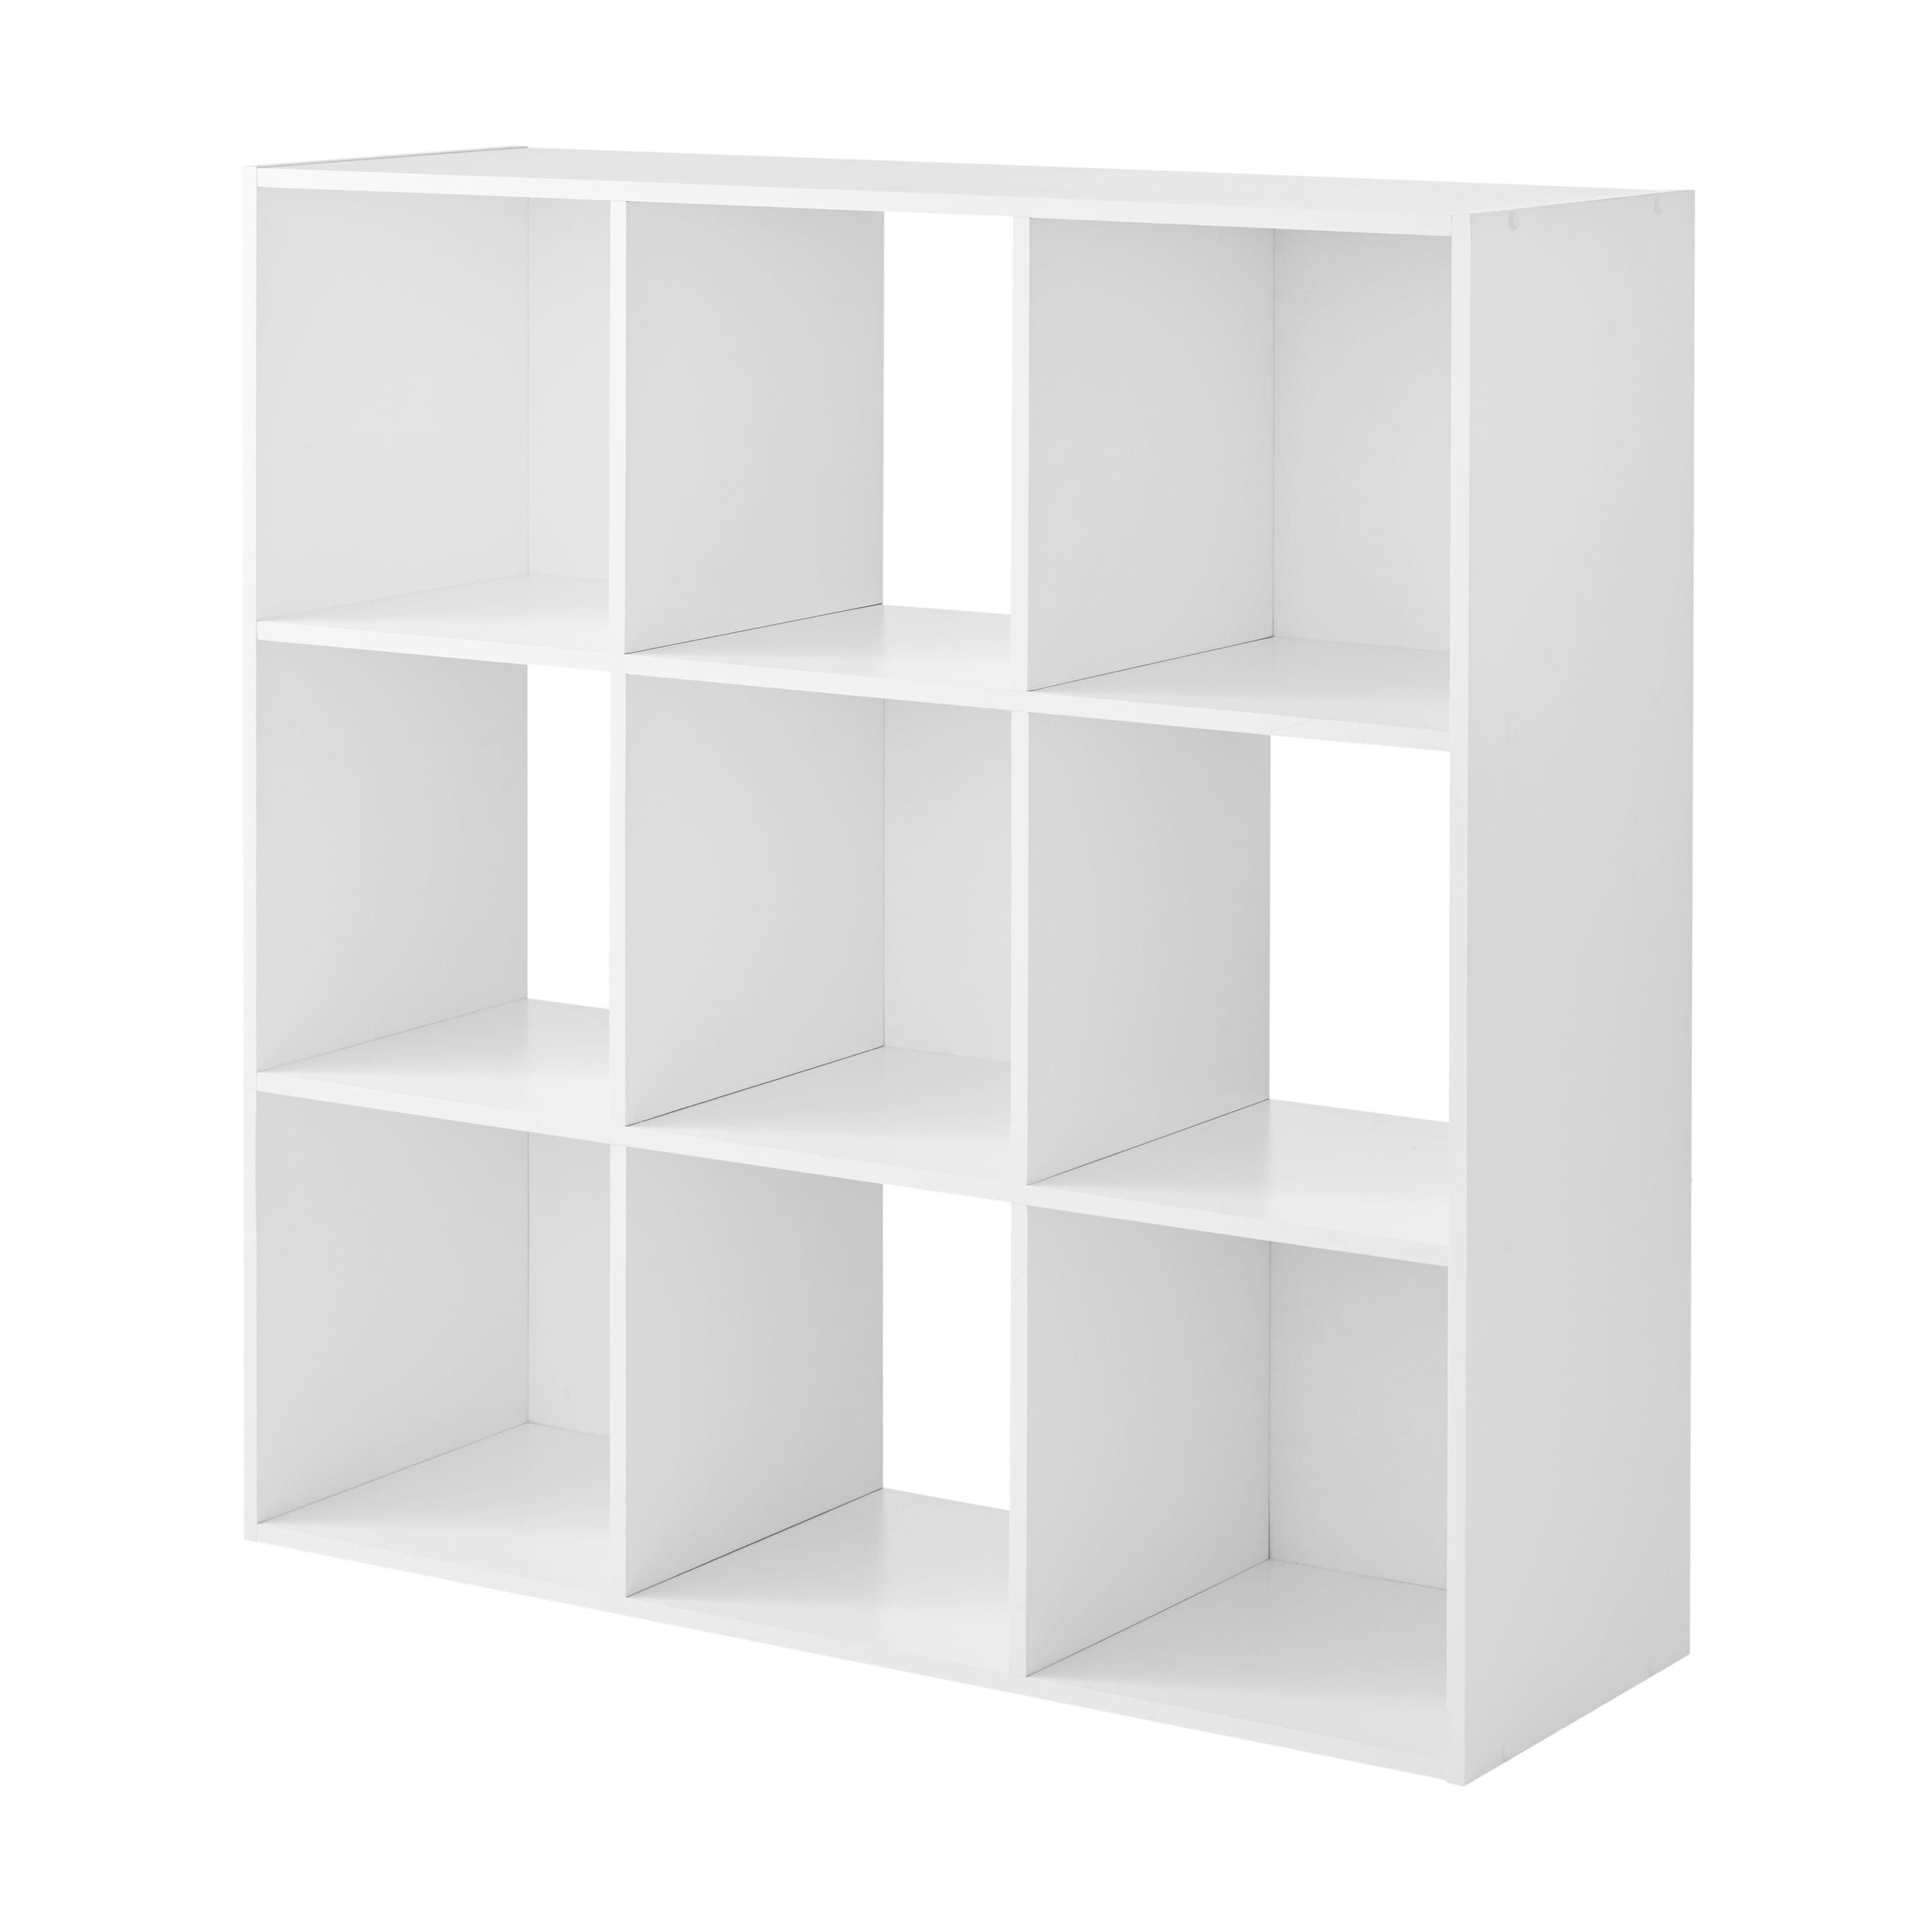 White 5 Cube Bookcase Shelving Unit Display 2 Doors Storage Organiser Cabinet UK 